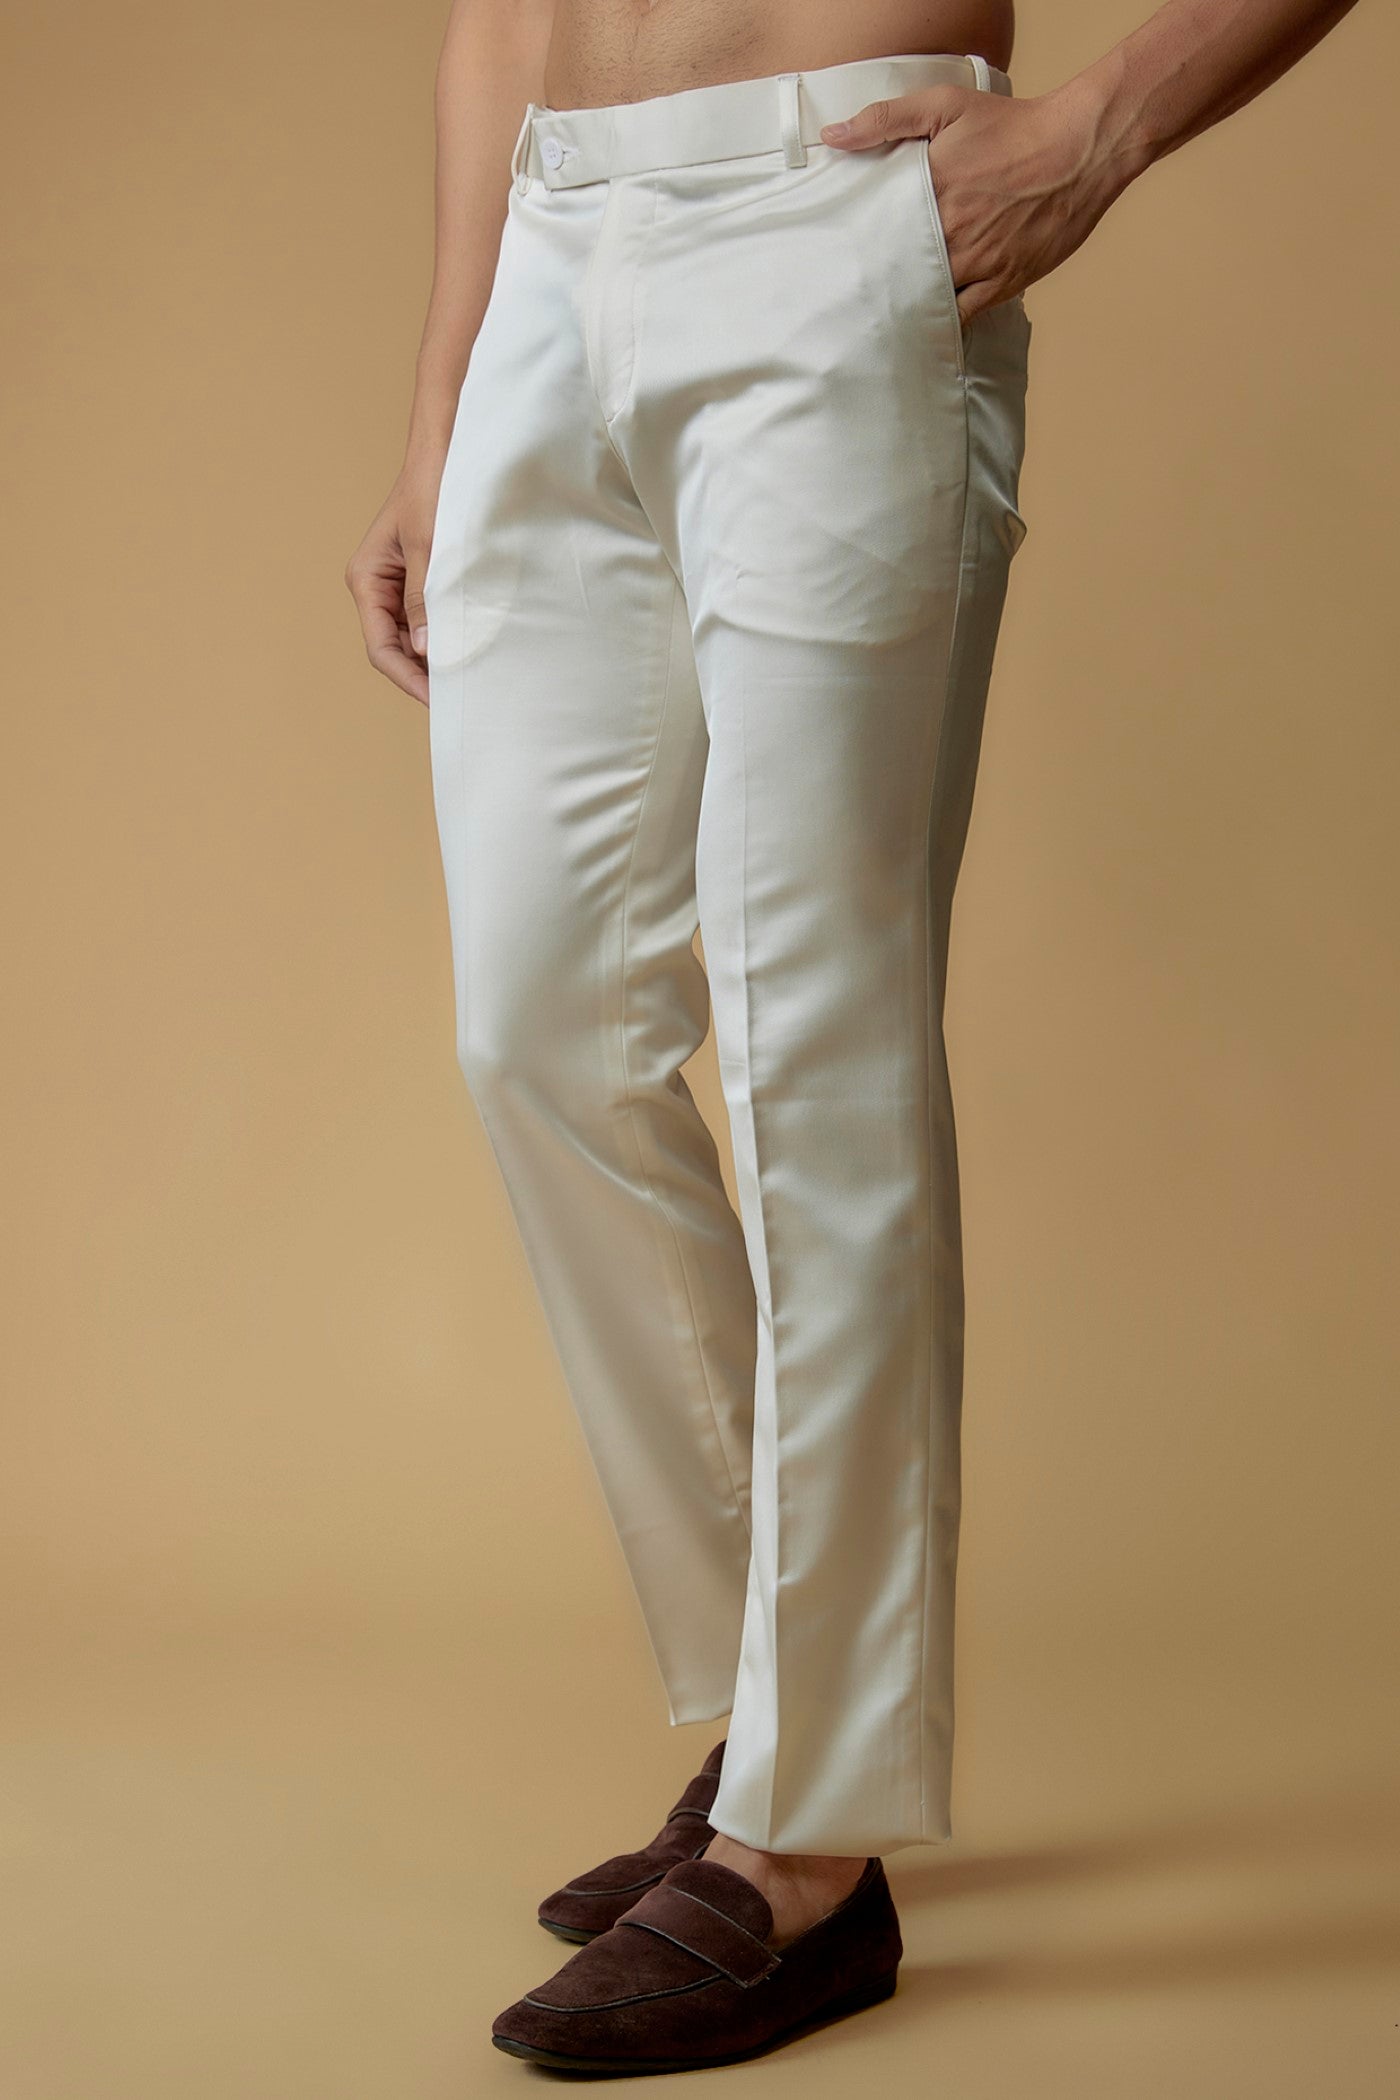 Lace White Italian Jacquard Tuxedo Set